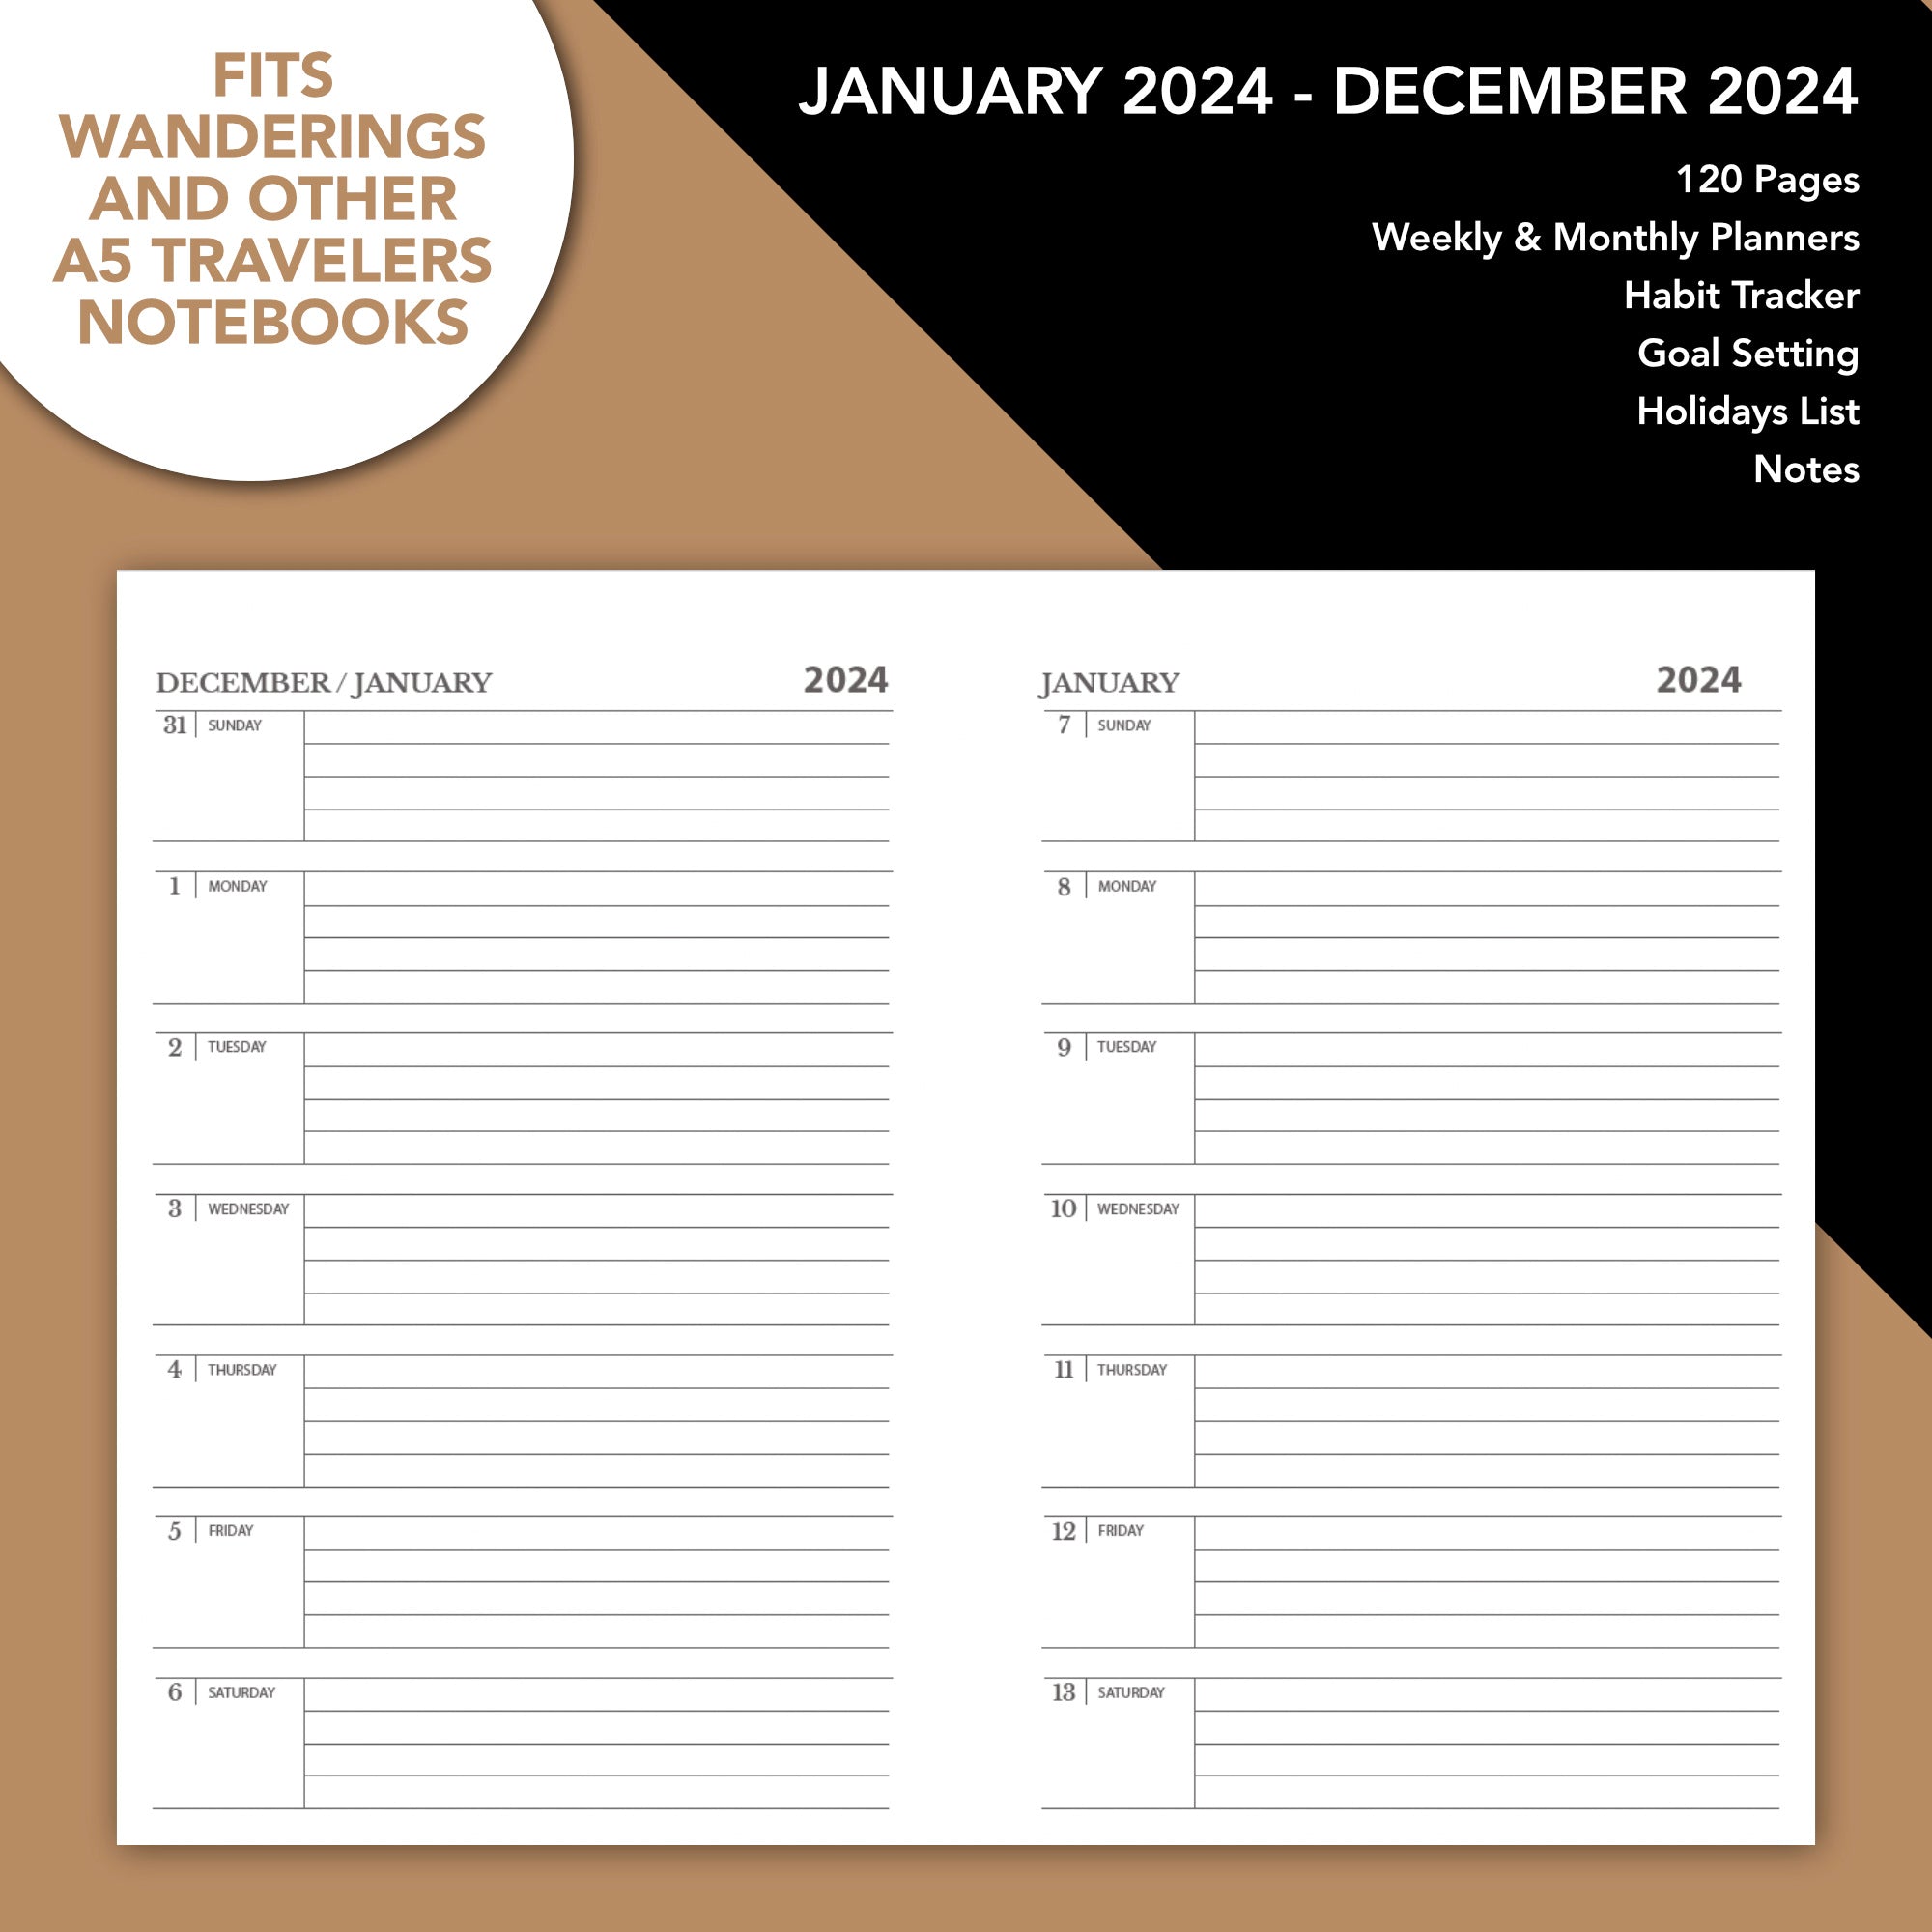 Printable Standard sized Blank Traveler's Notebook Insert April